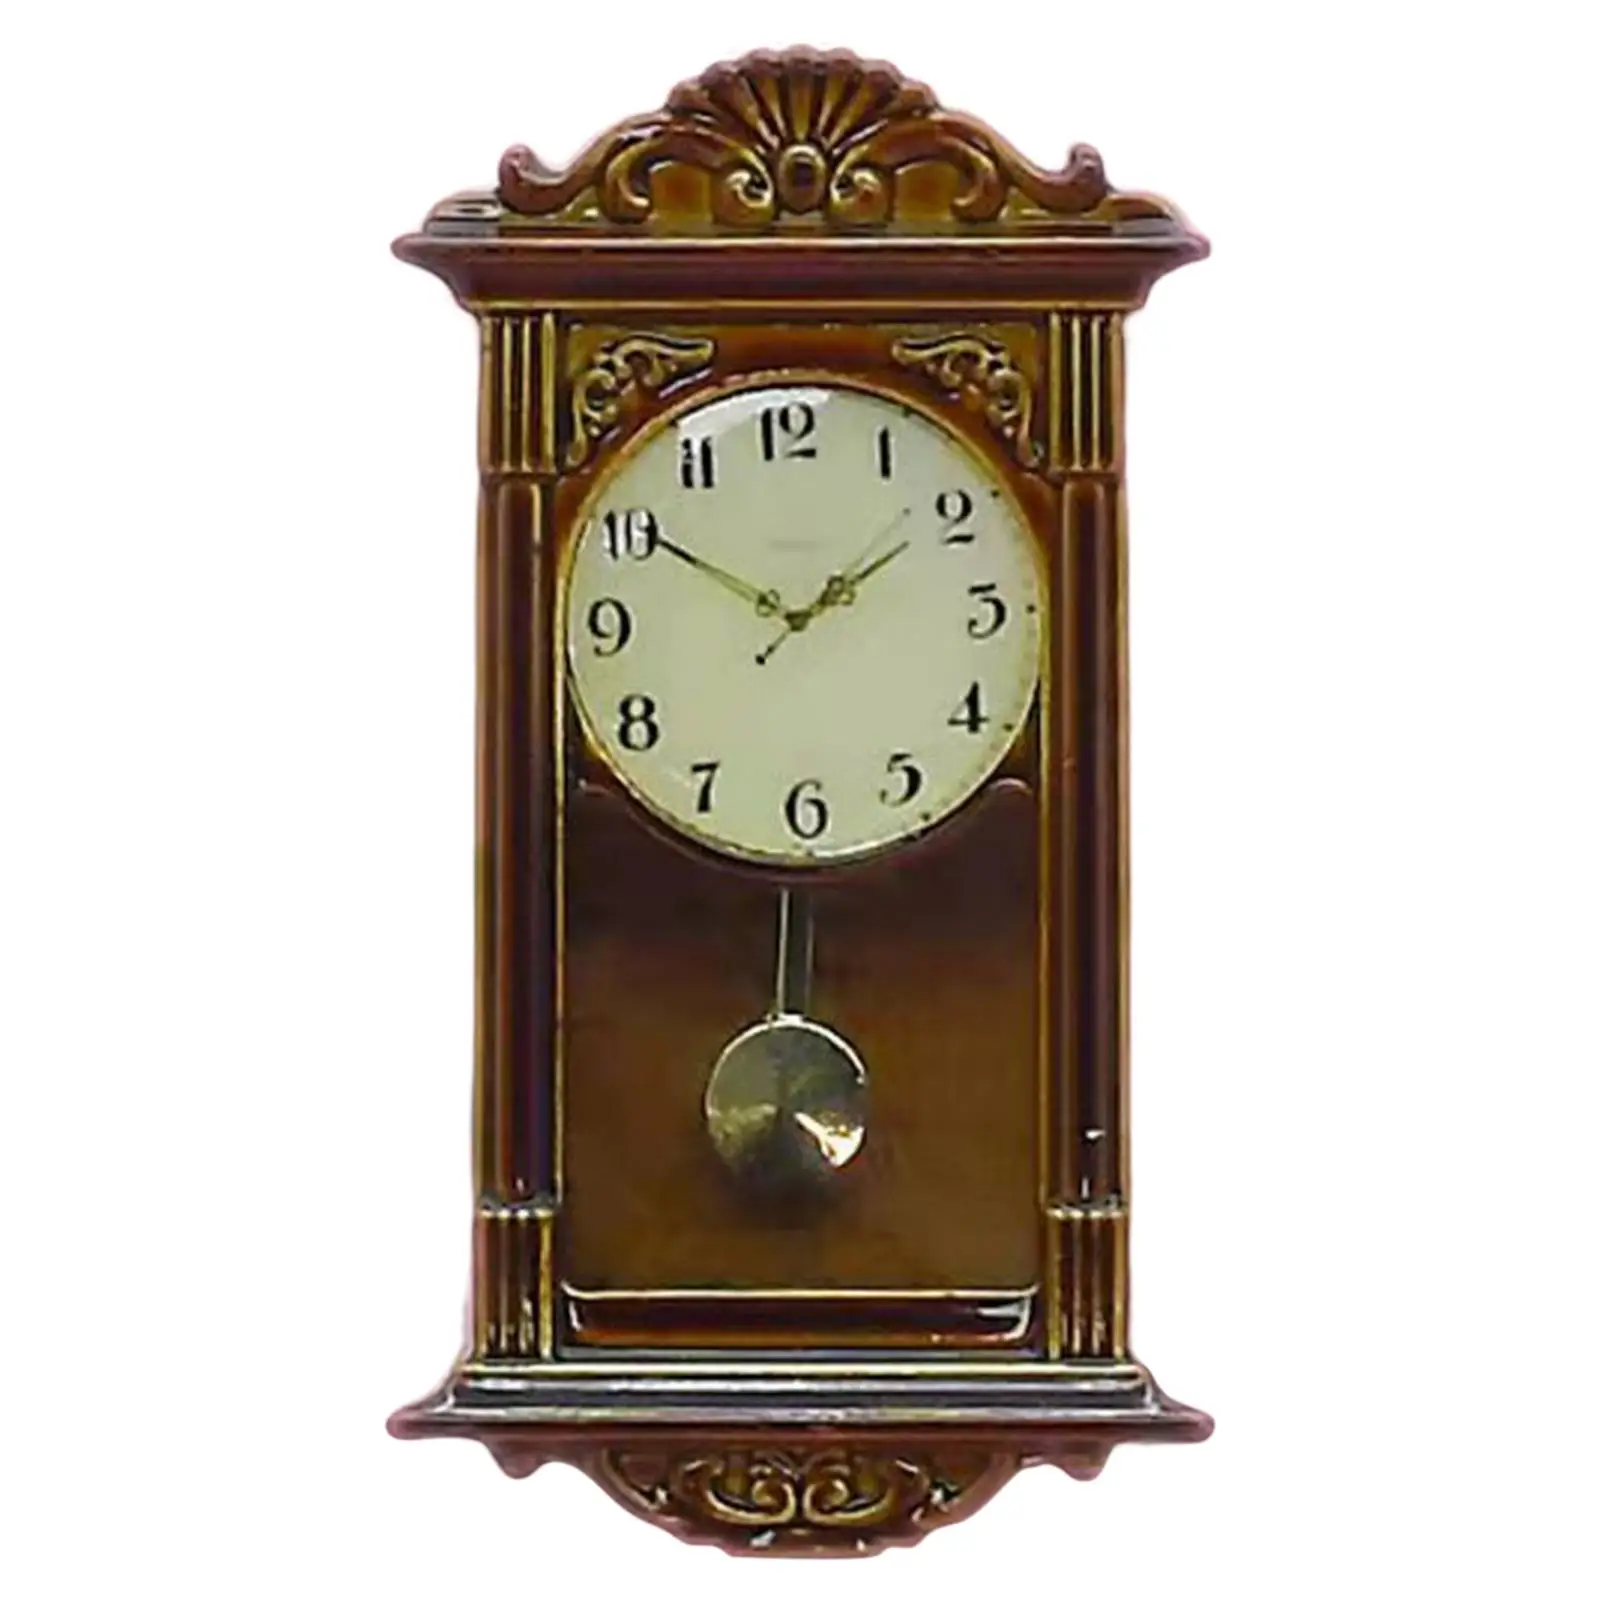 Retro Dollhouse Pendulum Clock Furniture Model Accessories Decoration for